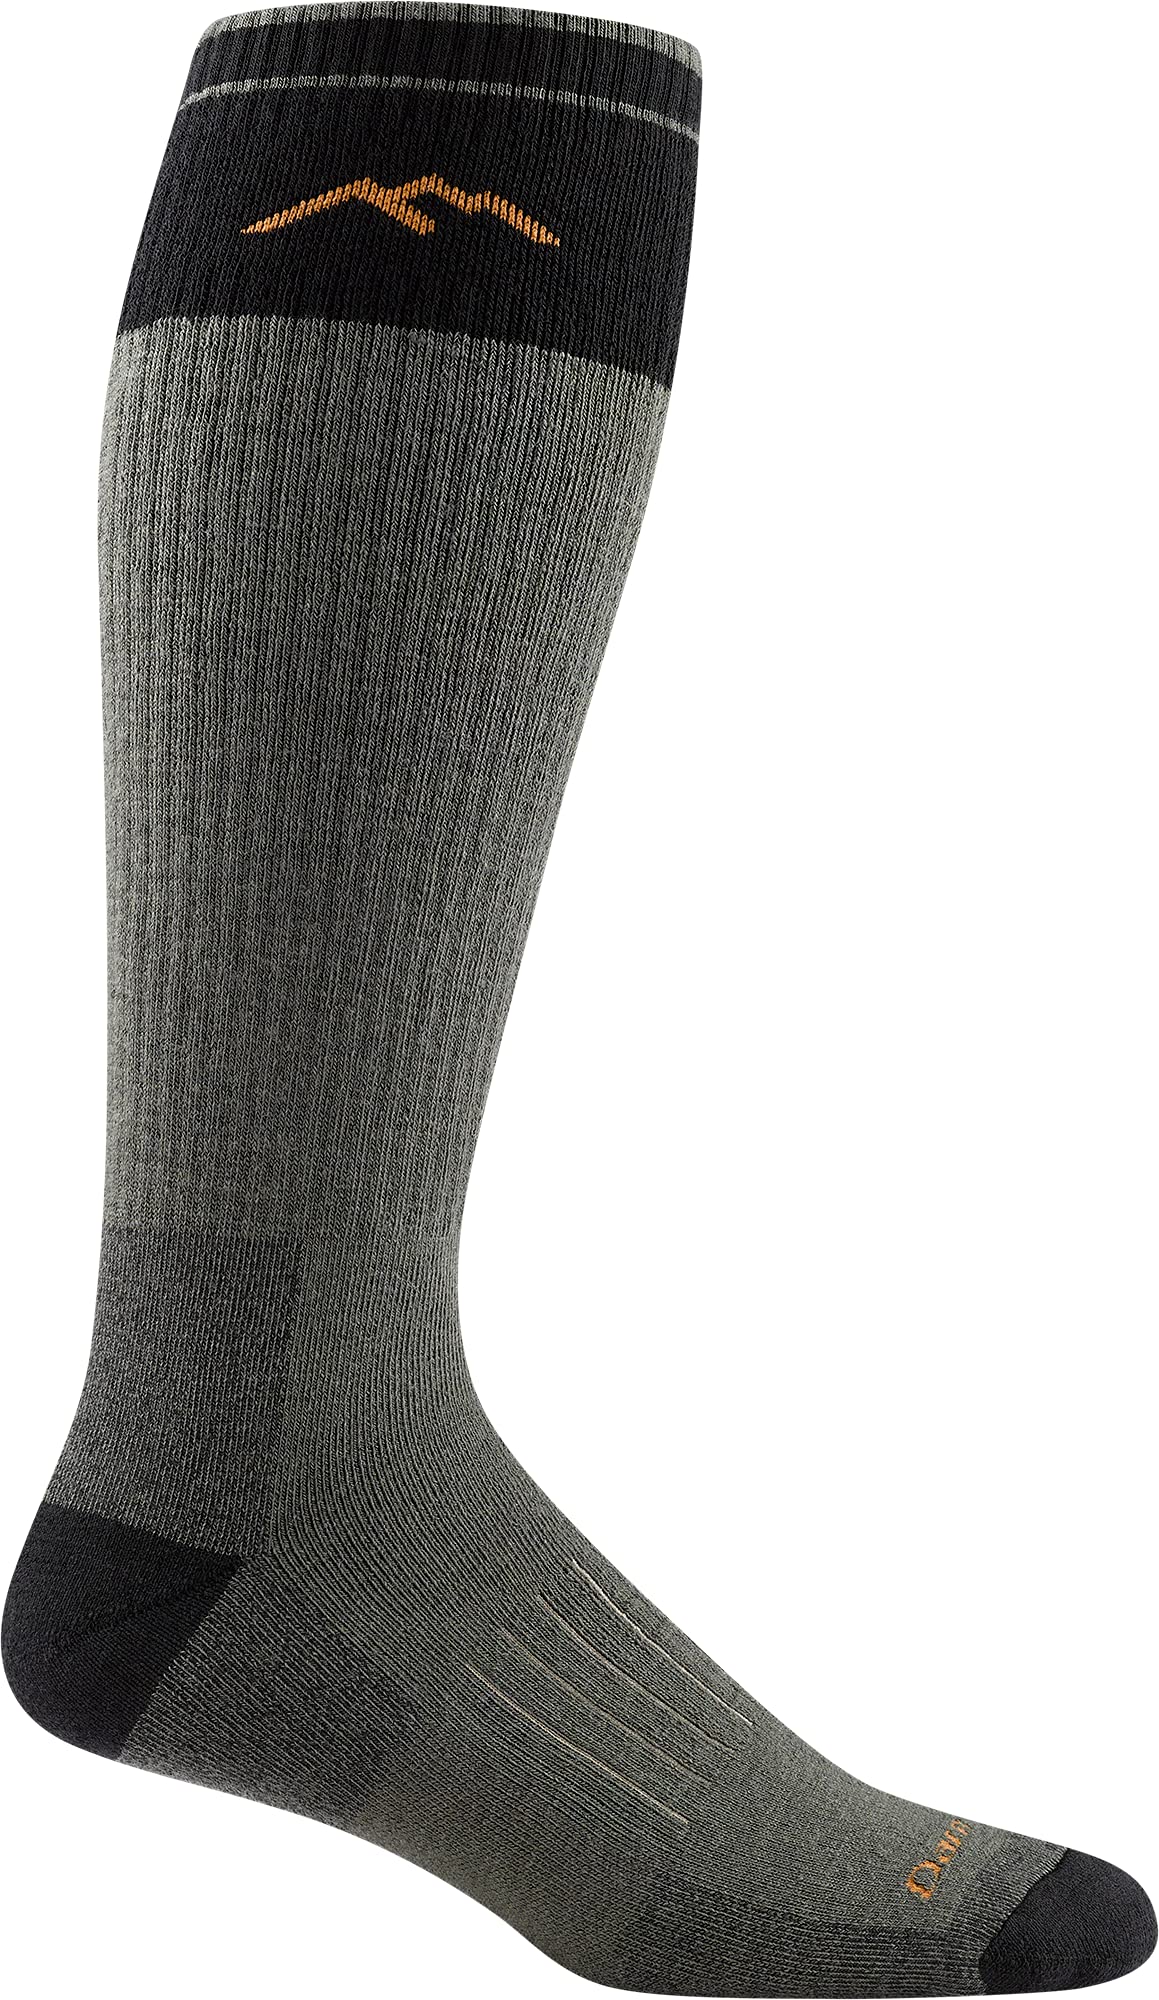 Darn Tough Men's Hojo Over-the-Calf Cushion Socks in Forest